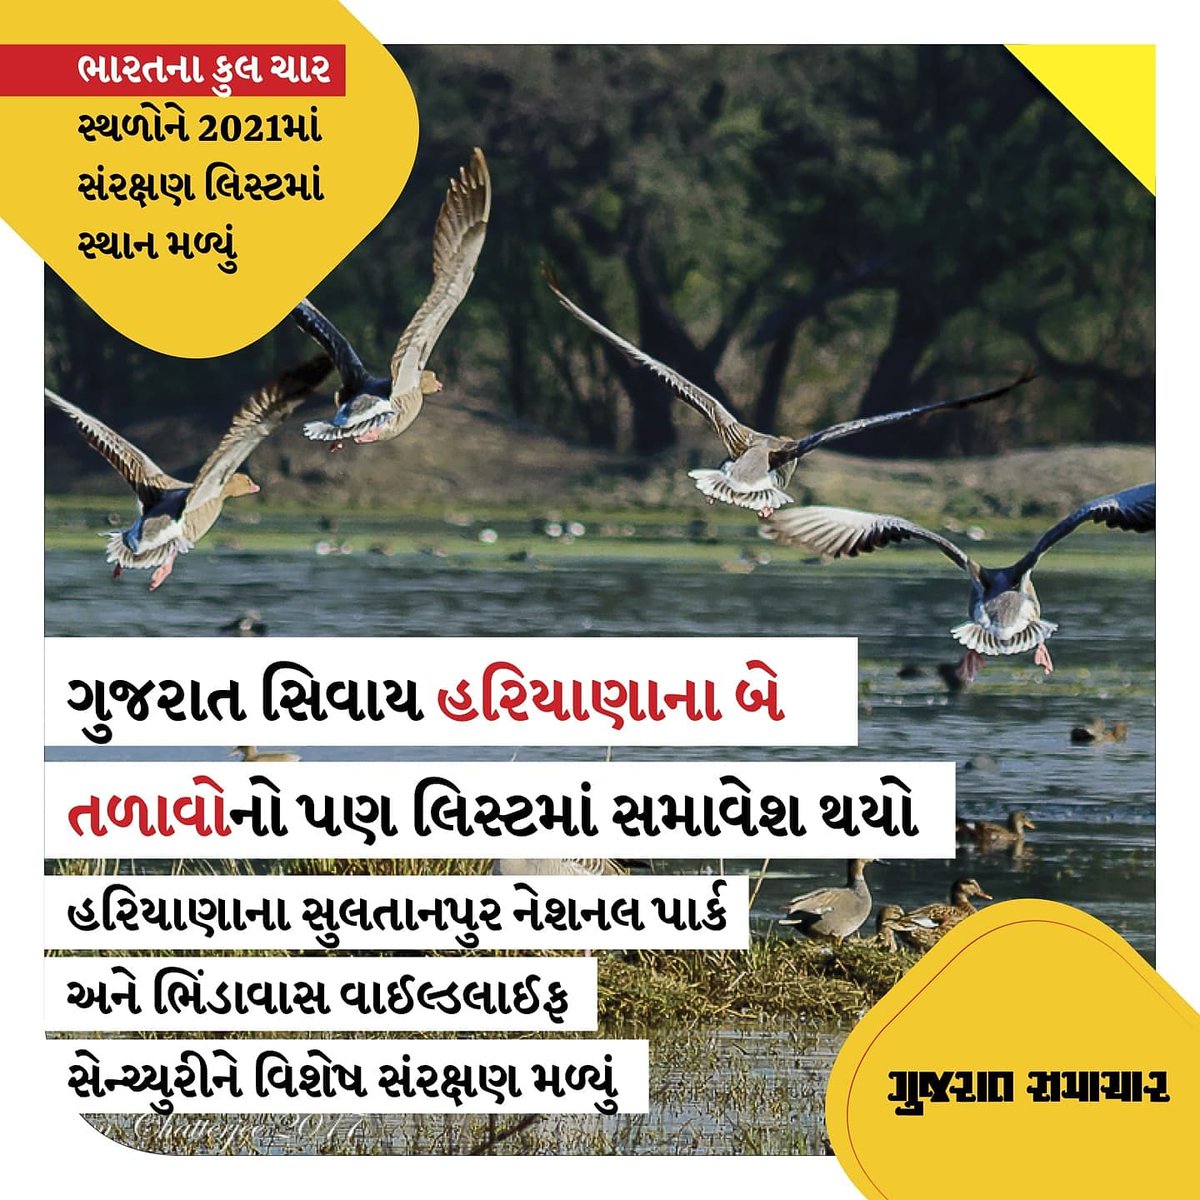 #GujaratSamachar
#GSNews
#RamsarSites 
#Thollake 
#VadhvanaLake